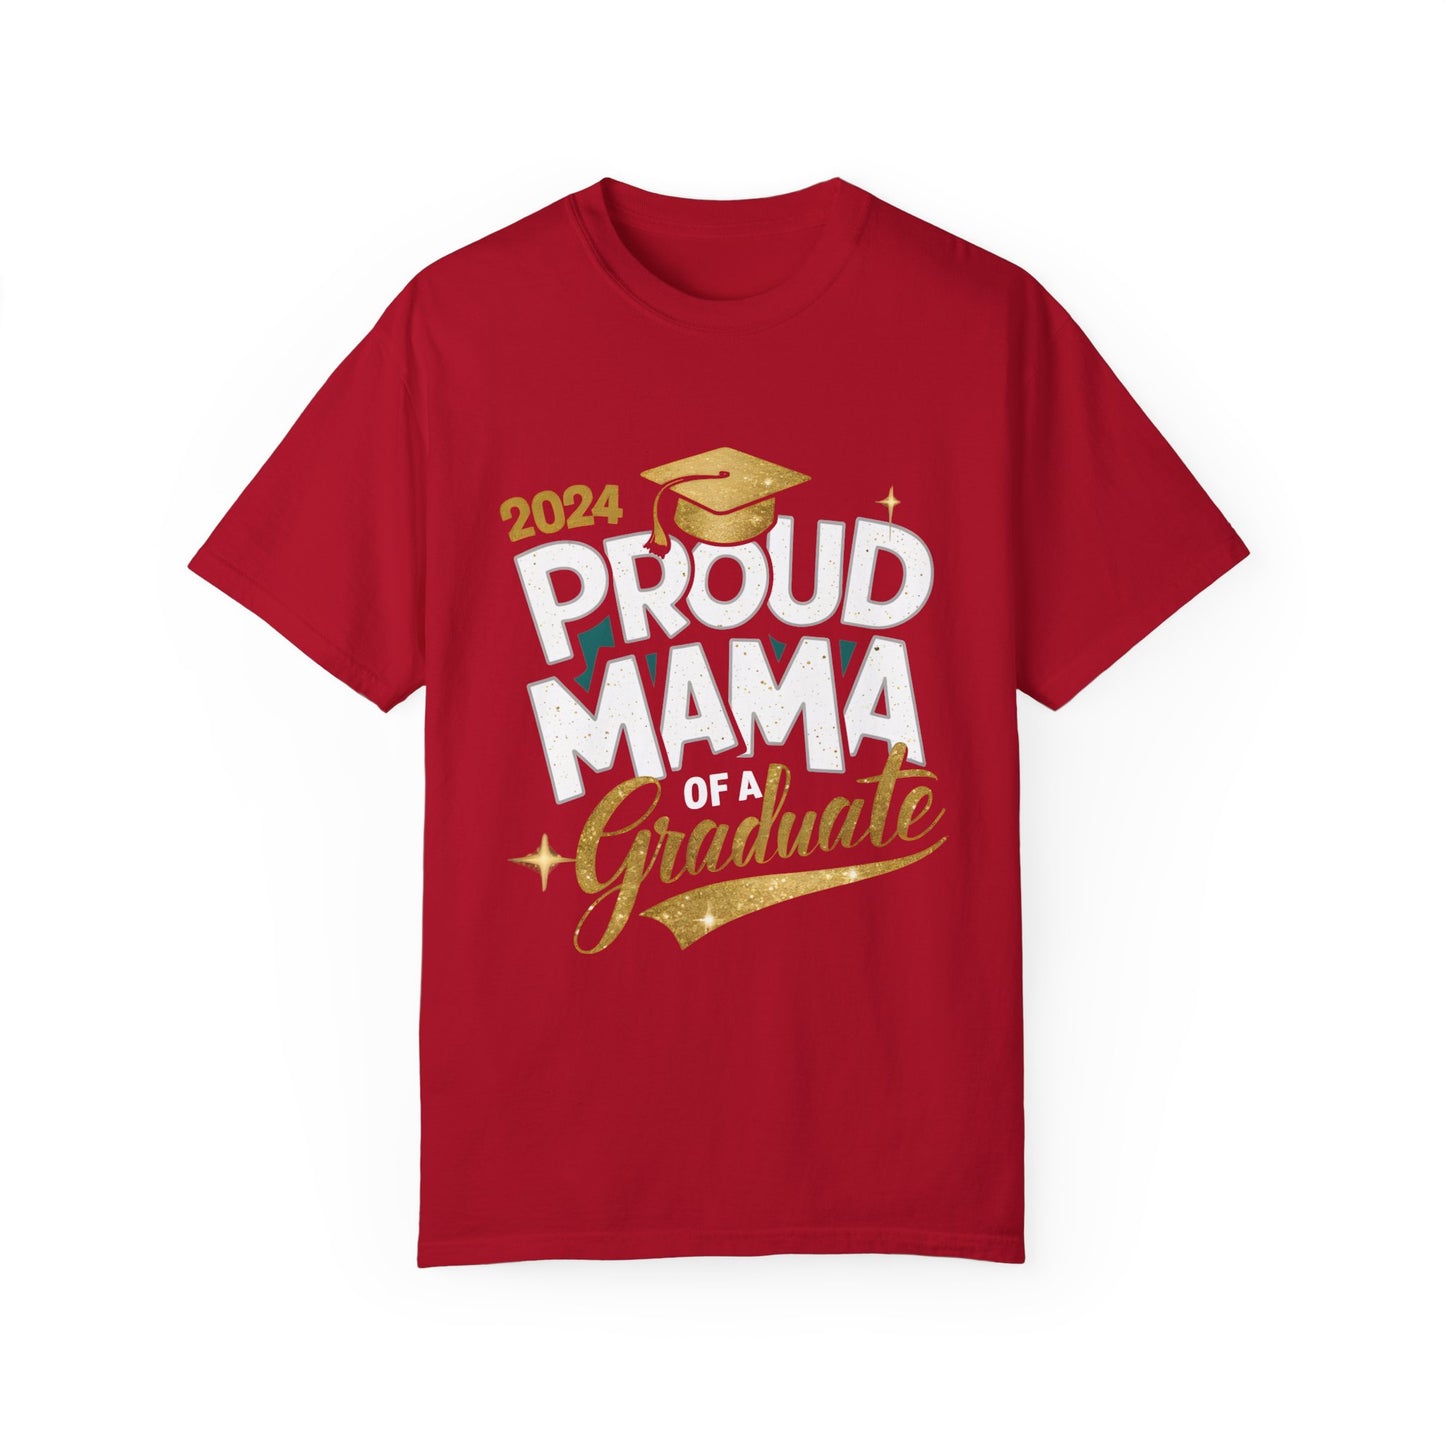 Proud Mama of a 2024 Graduate Unisex Garment-dyed T-shirt Cotton Funny Humorous Graphic Soft Premium Unisex Men Women Red T-shirt Birthday Gift-2